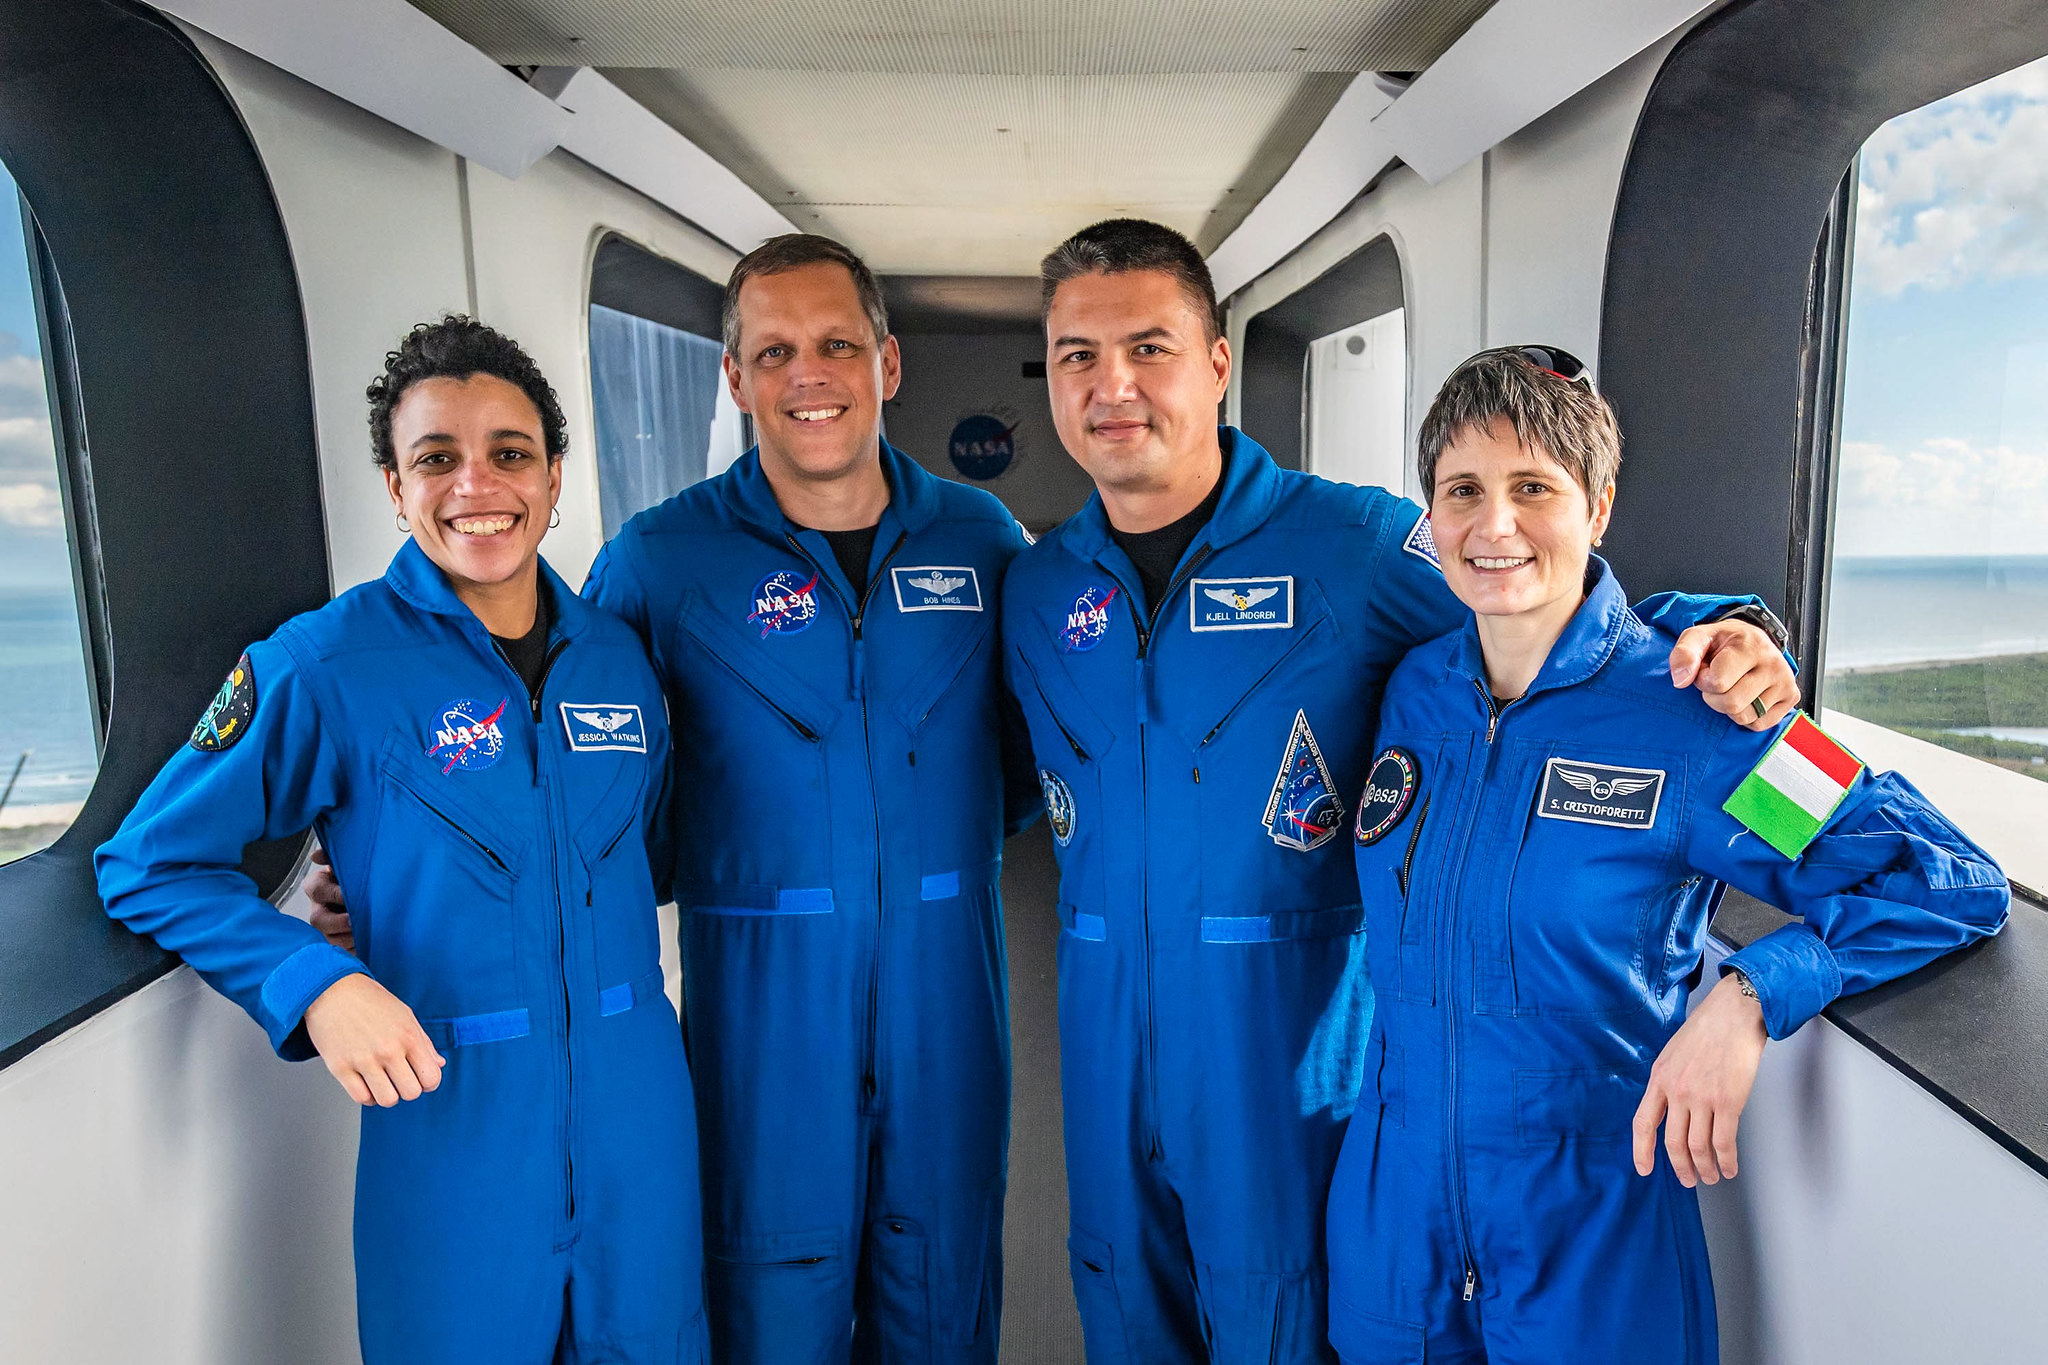 NASA astronaut Jessica Watkins; NASA astronaut Robert “Bob” Hines; NASA astronaut Kjell Lindgren; and ESA (European Space Agency) astronaut Samantha Cristoforetti of Italy